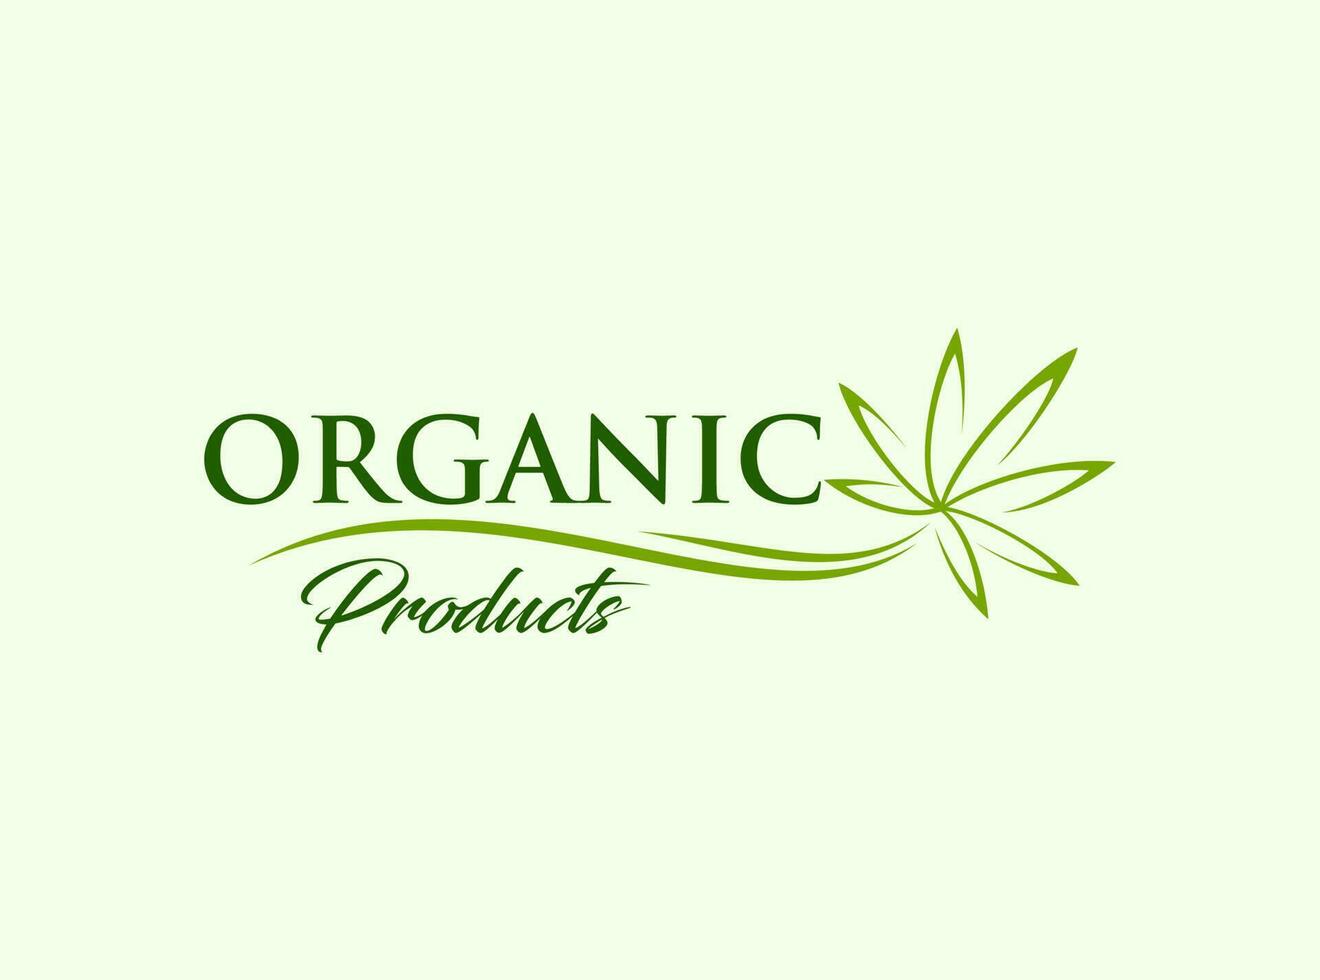 Organic Products Hemp leaf logo design concept vector